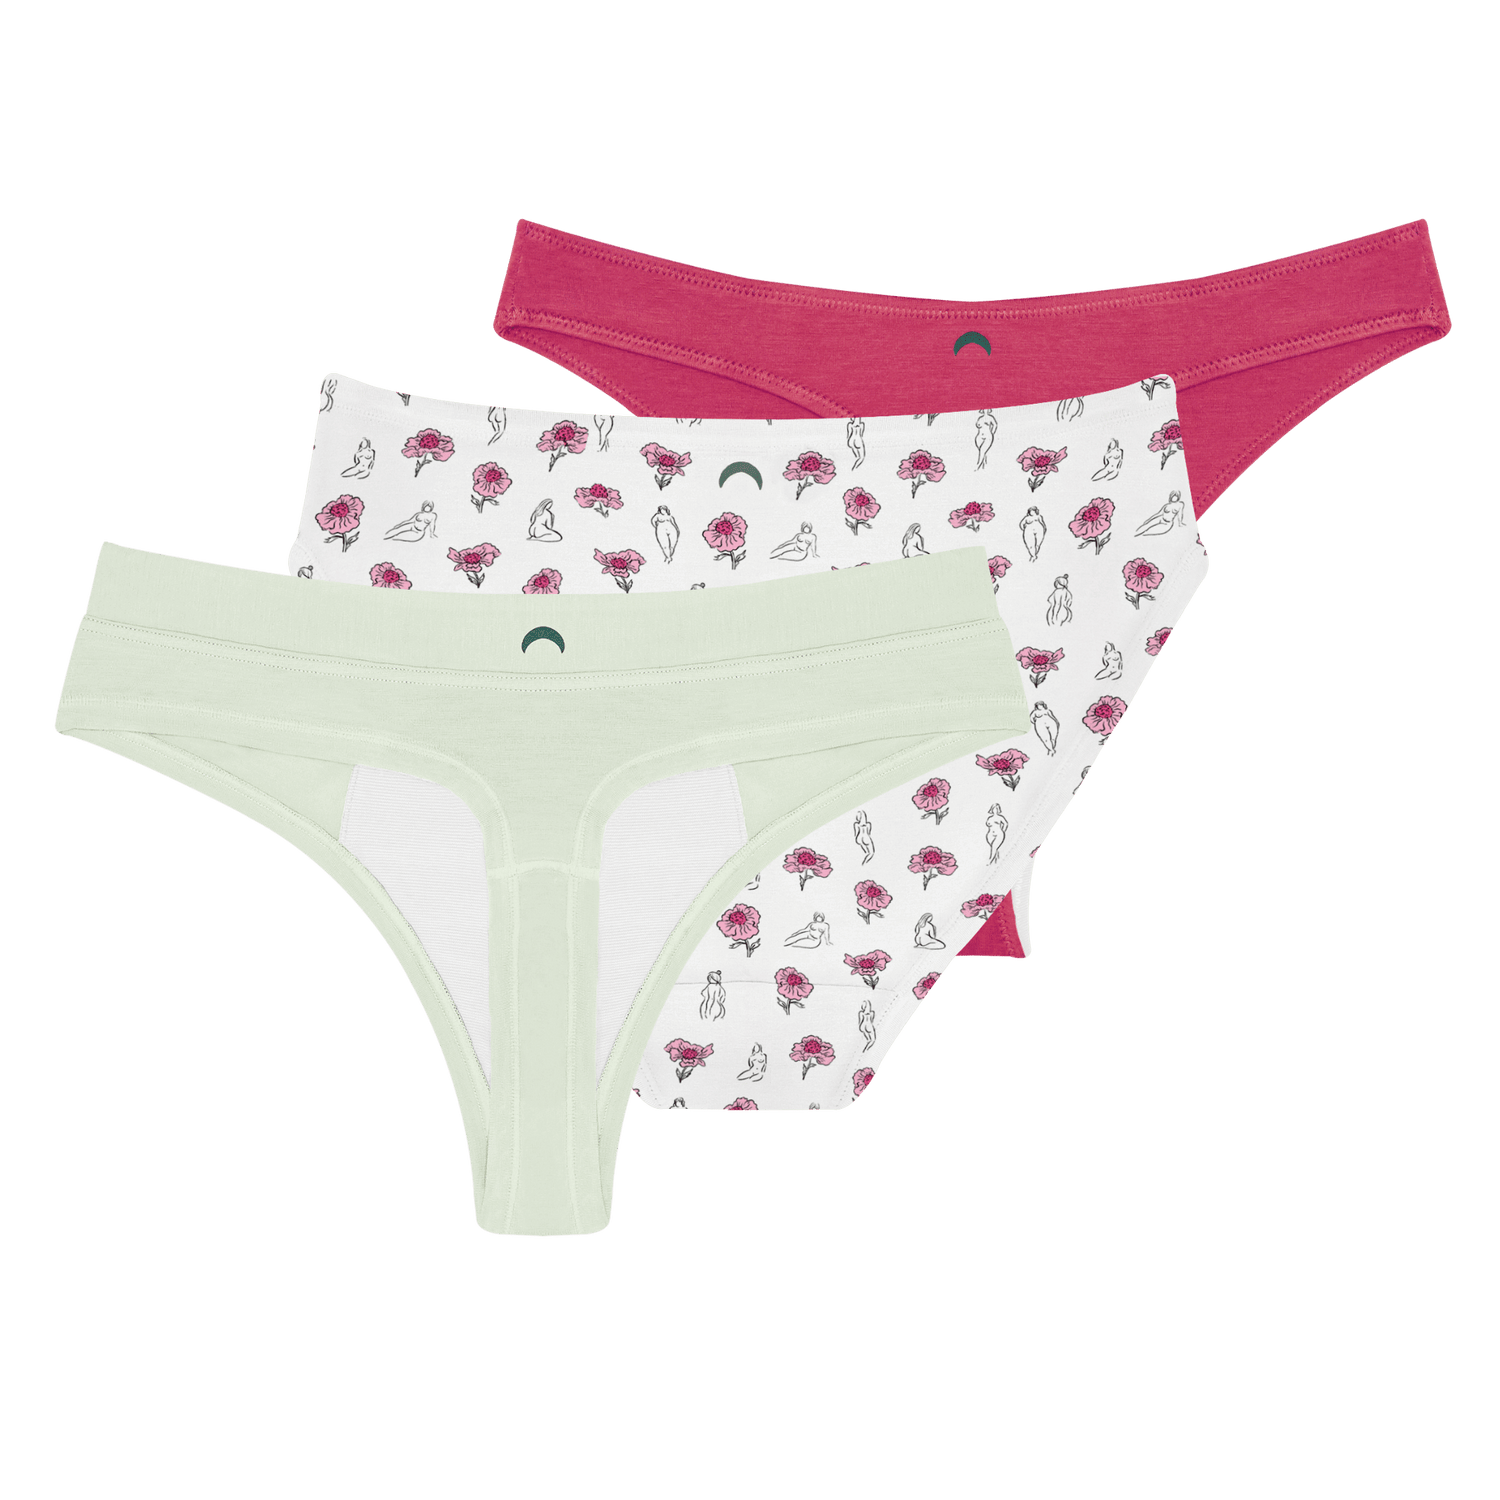 Spring Equinox Sale – huha underwear